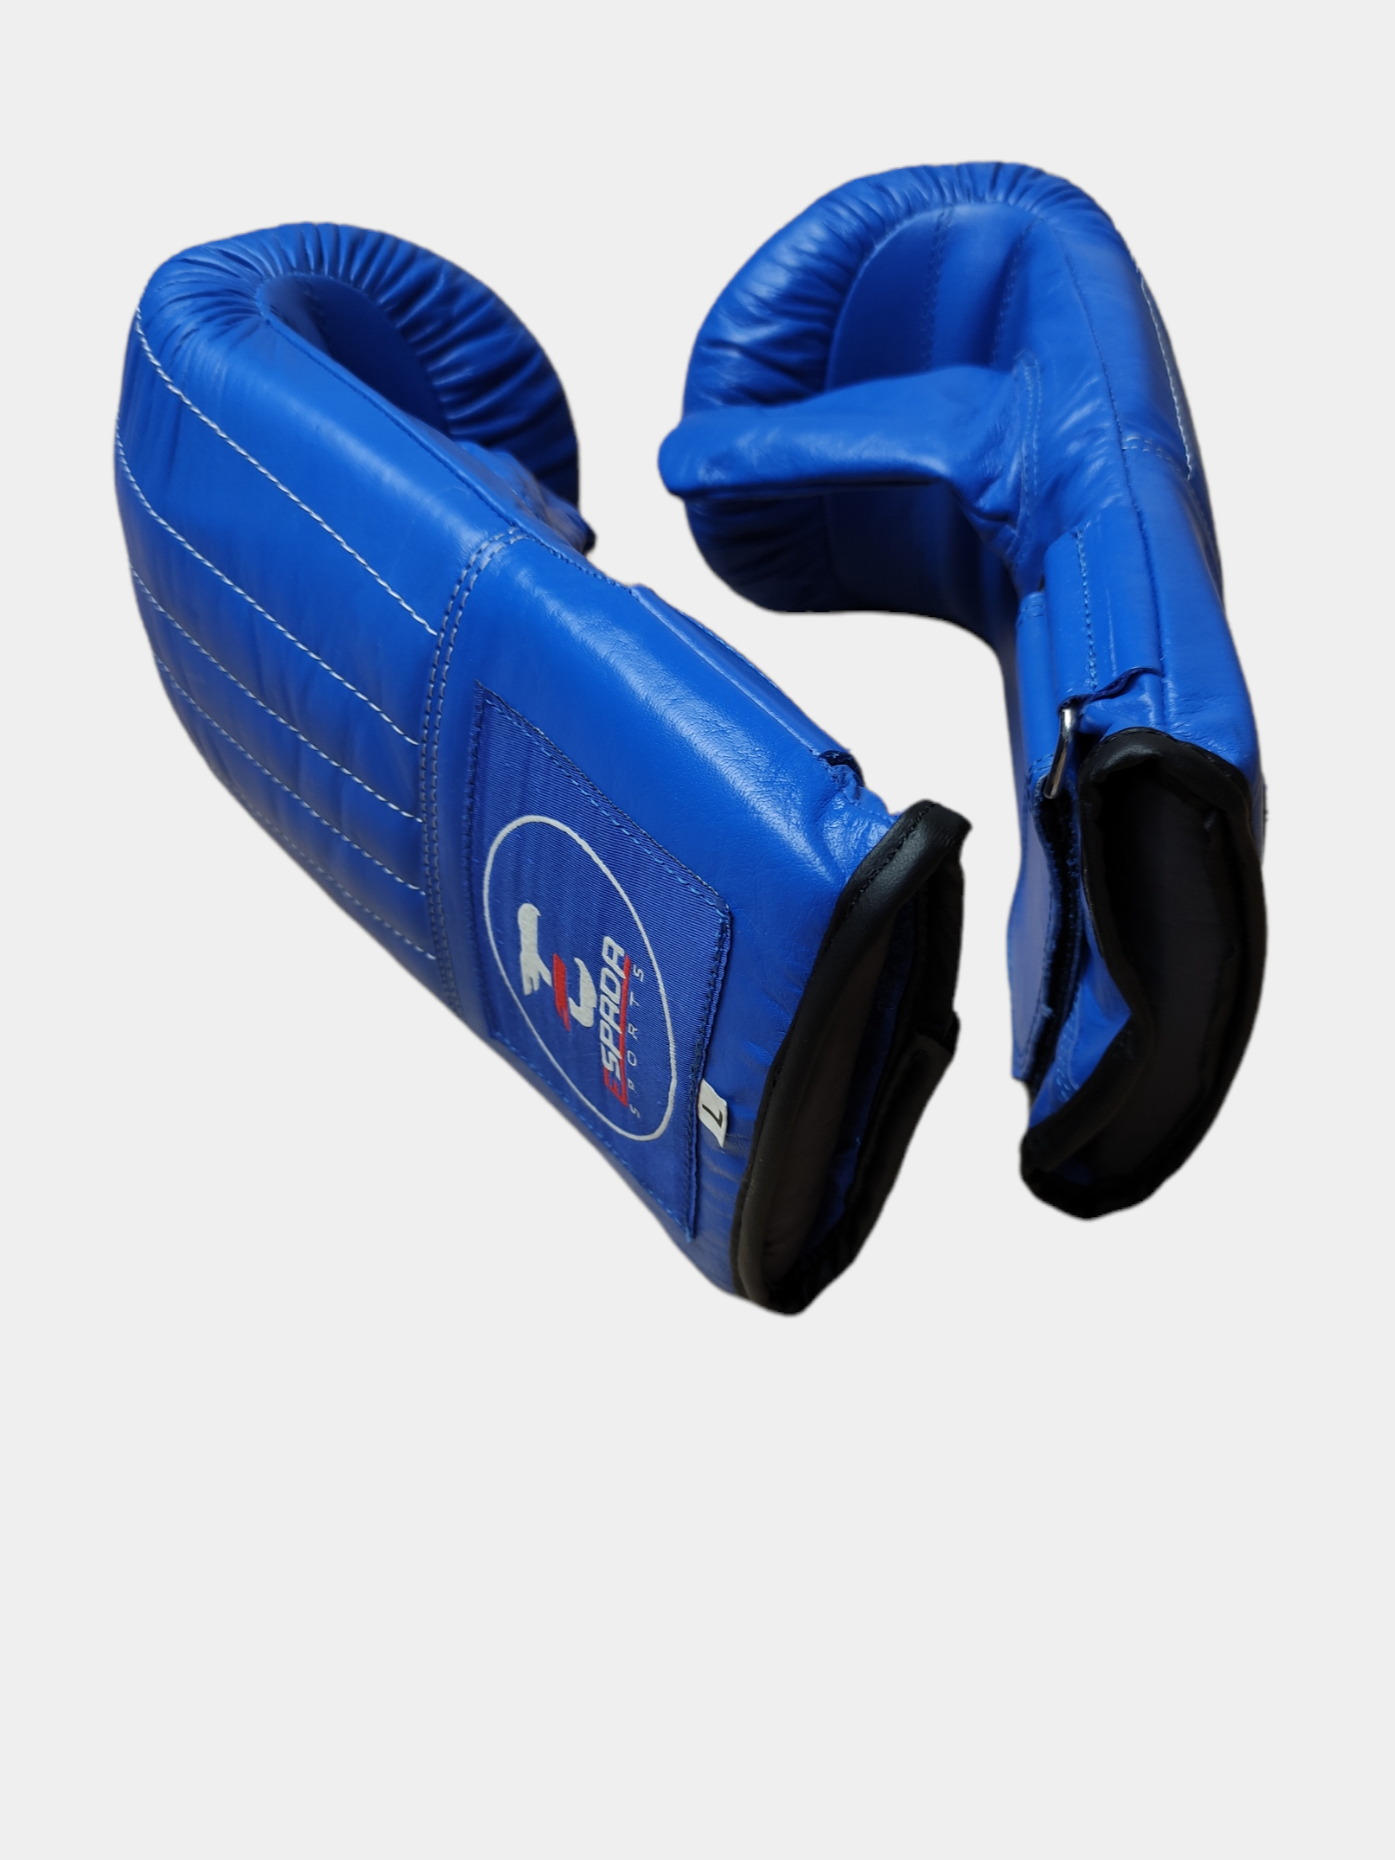  перчатки для бокса  по цене 900 ₽ в е .